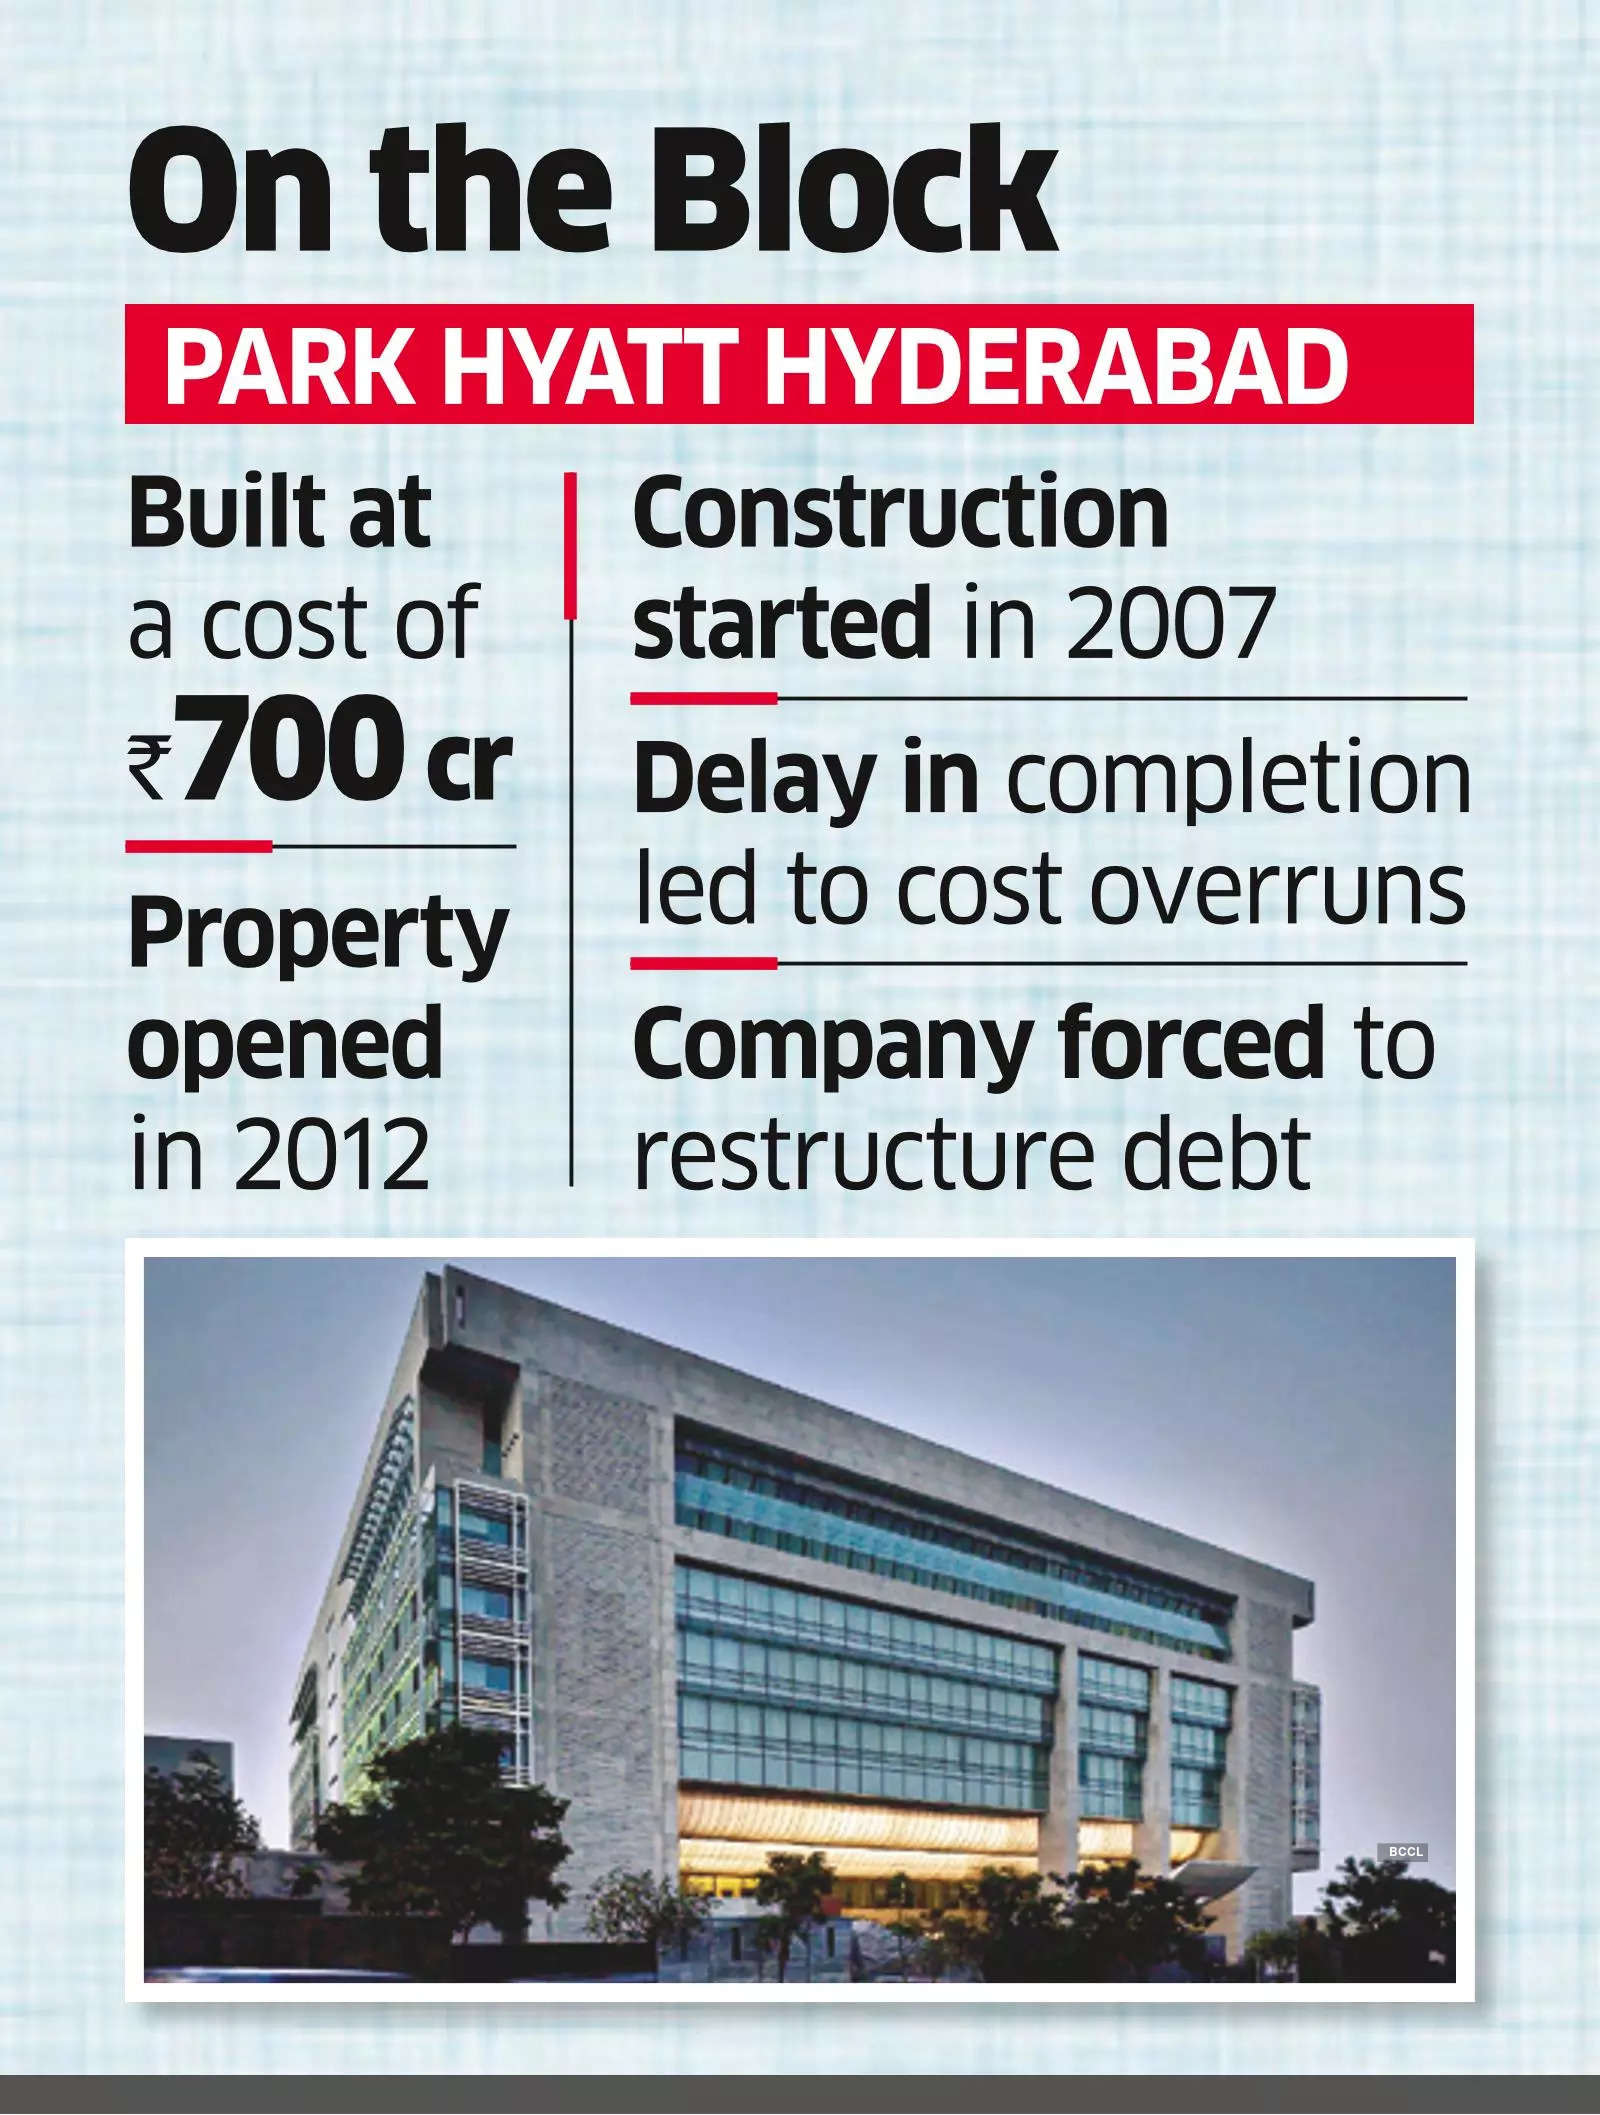 Omkara ARC Acquires Park Hyatt Hyd’s Bad Loans at 34% Discount